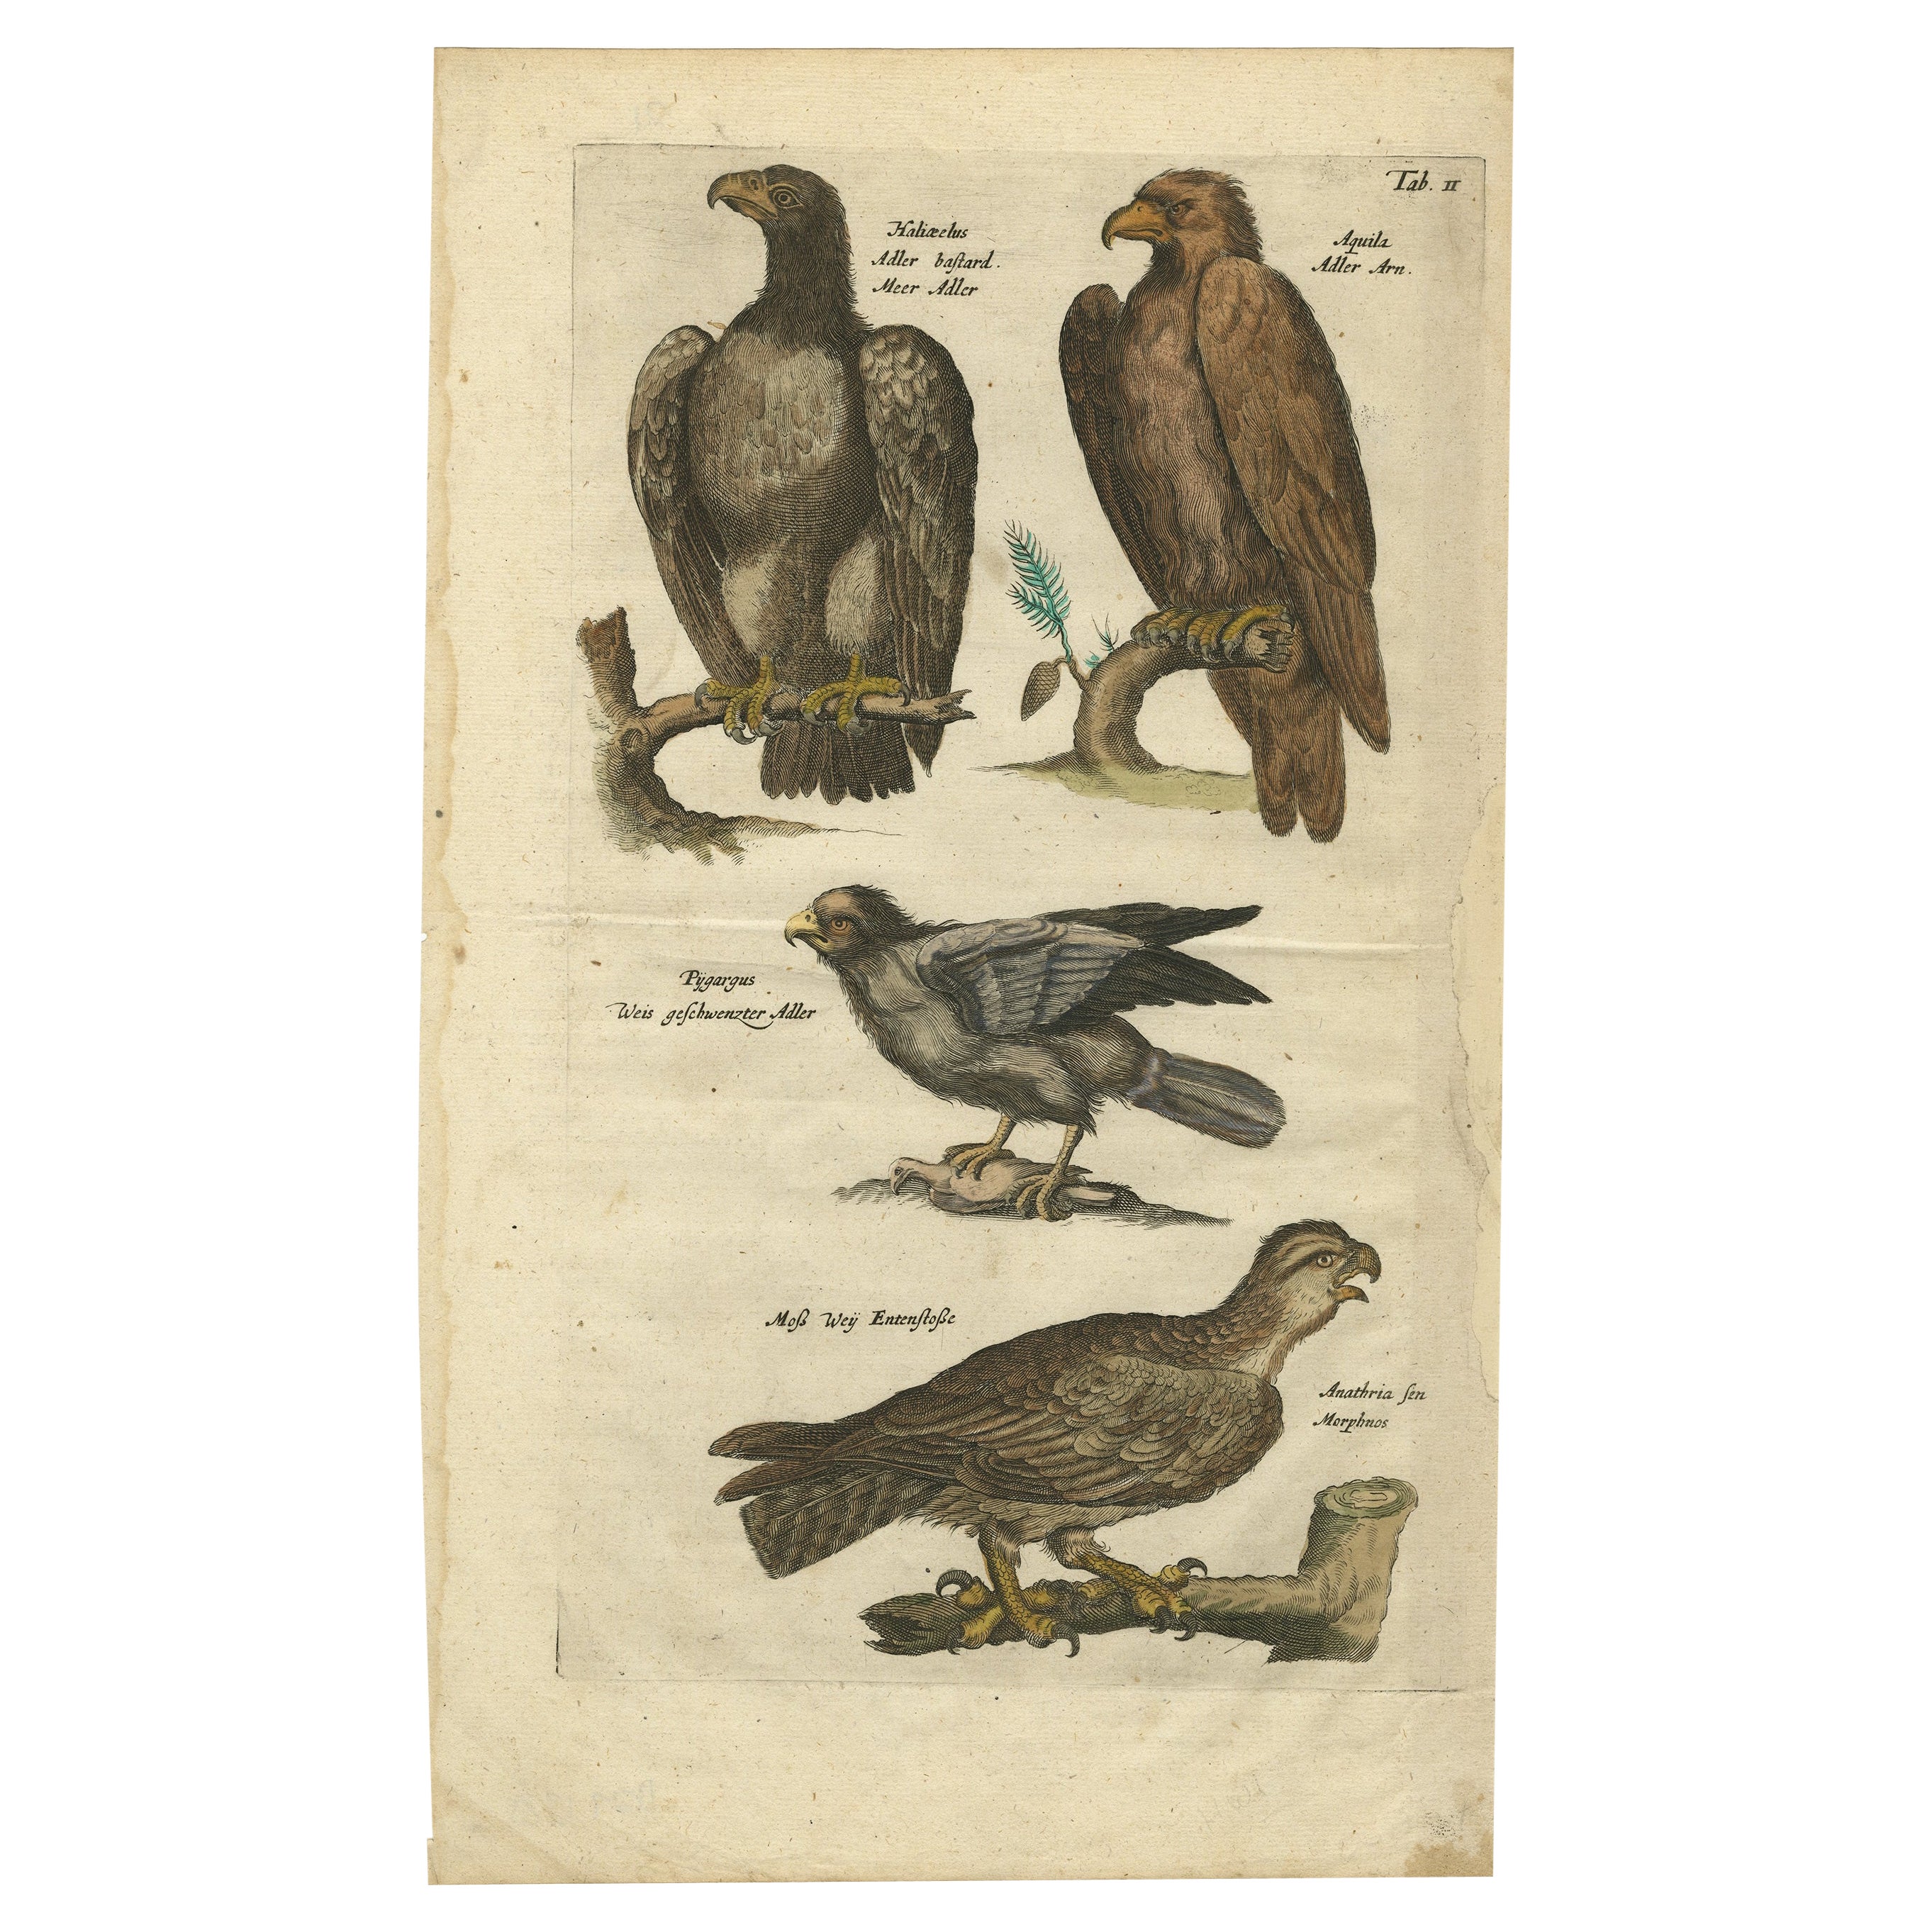 Original Antique Engraving of Various Birds of Prey, like Eagles & Harrier, 1657